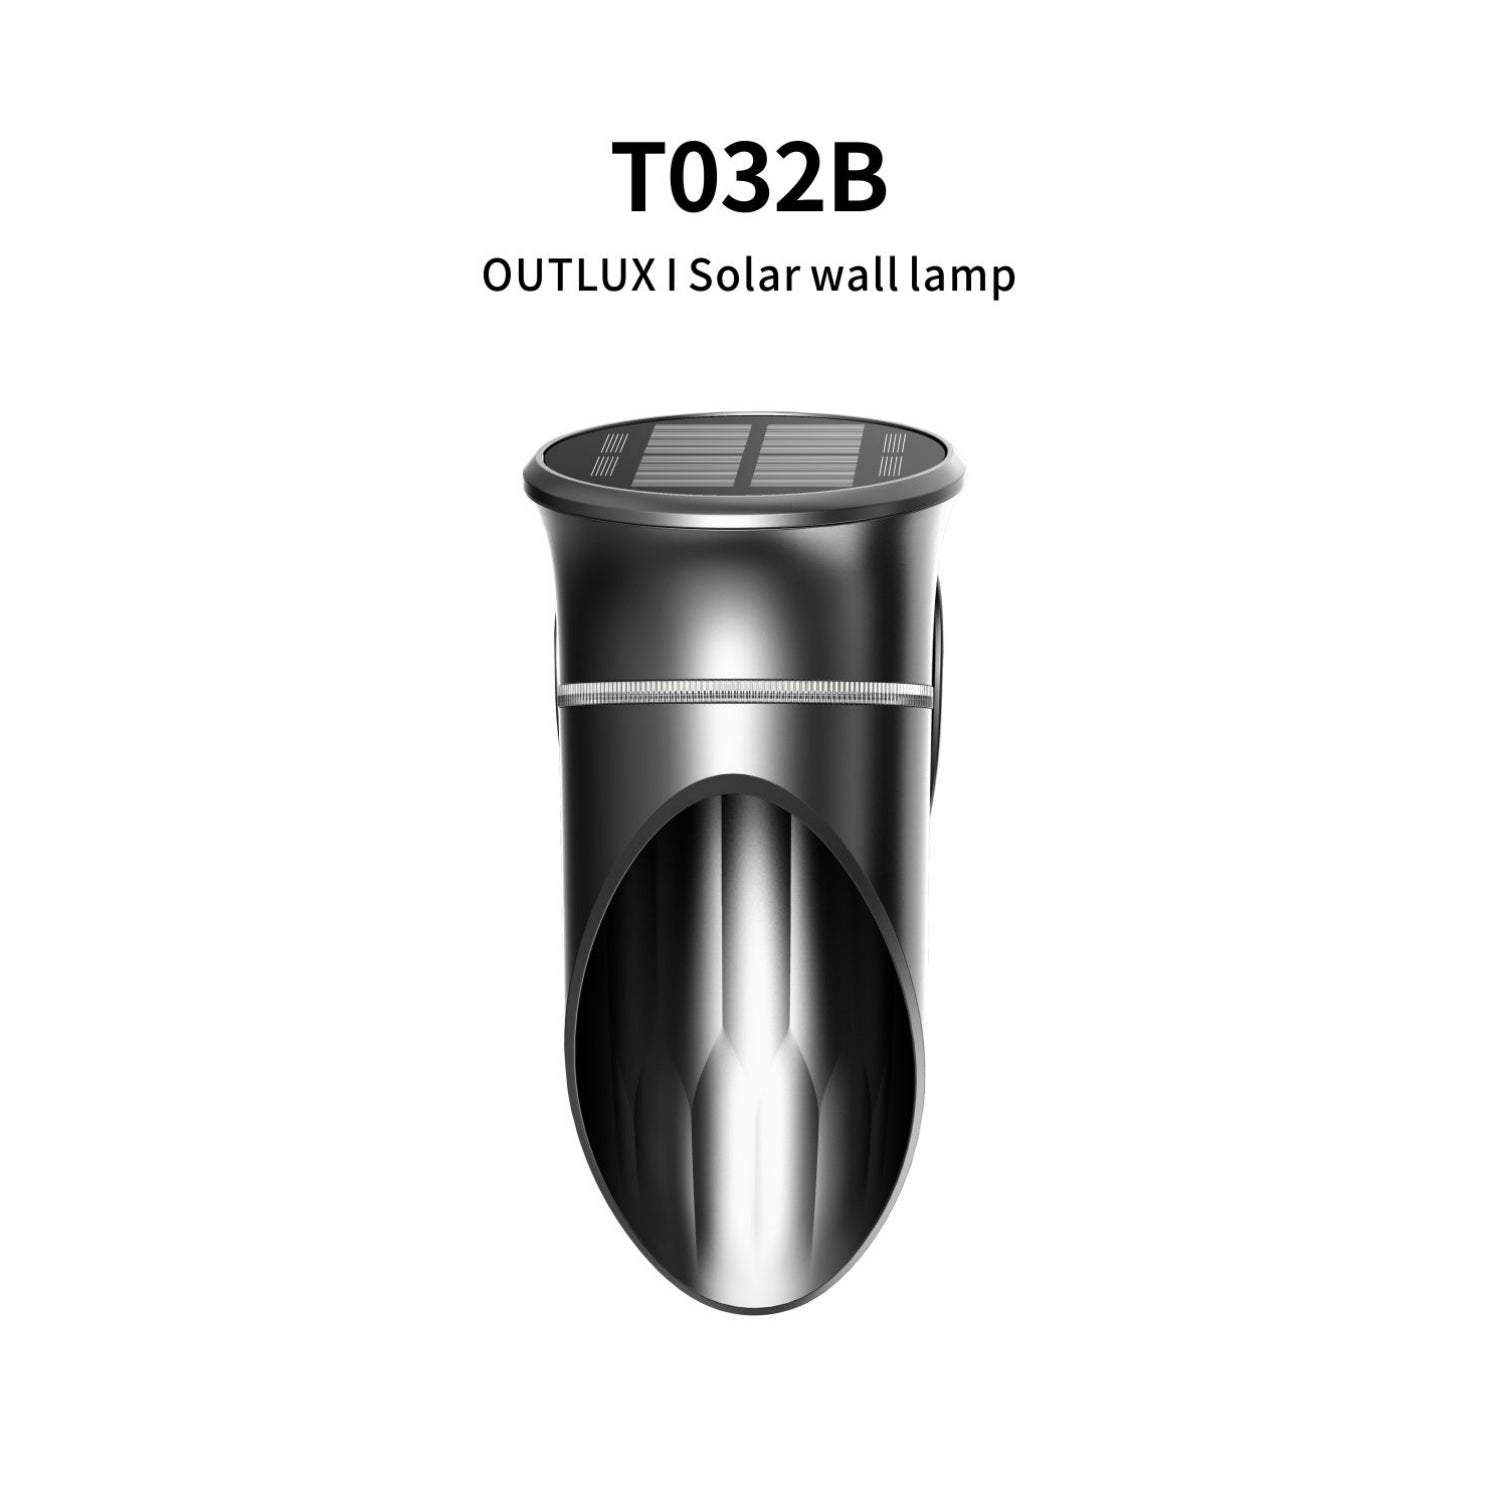 Outlux Solar Wall Lights- T032B